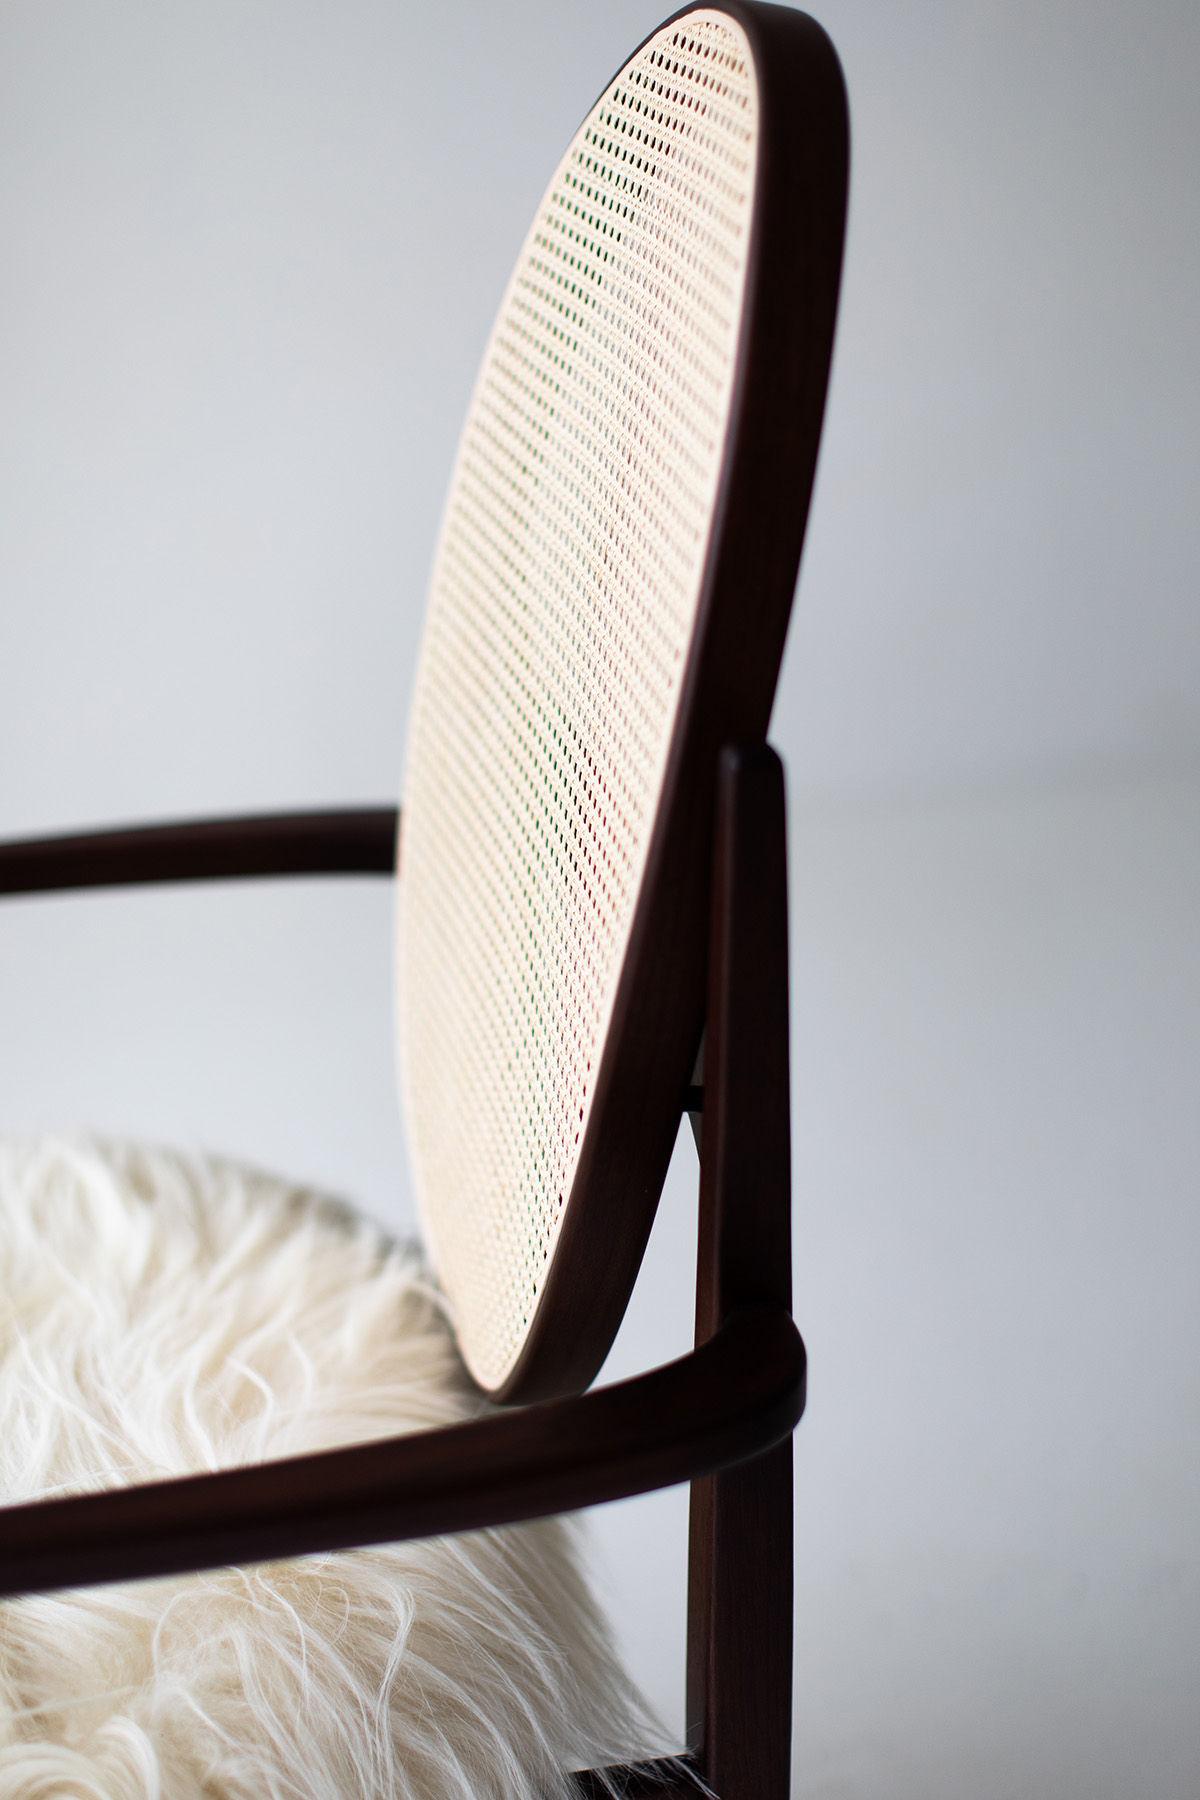 American CraftAssociates Arm Chair, Milo Baughman Arm Chair, Walnut, Oval Cane Back For Sale